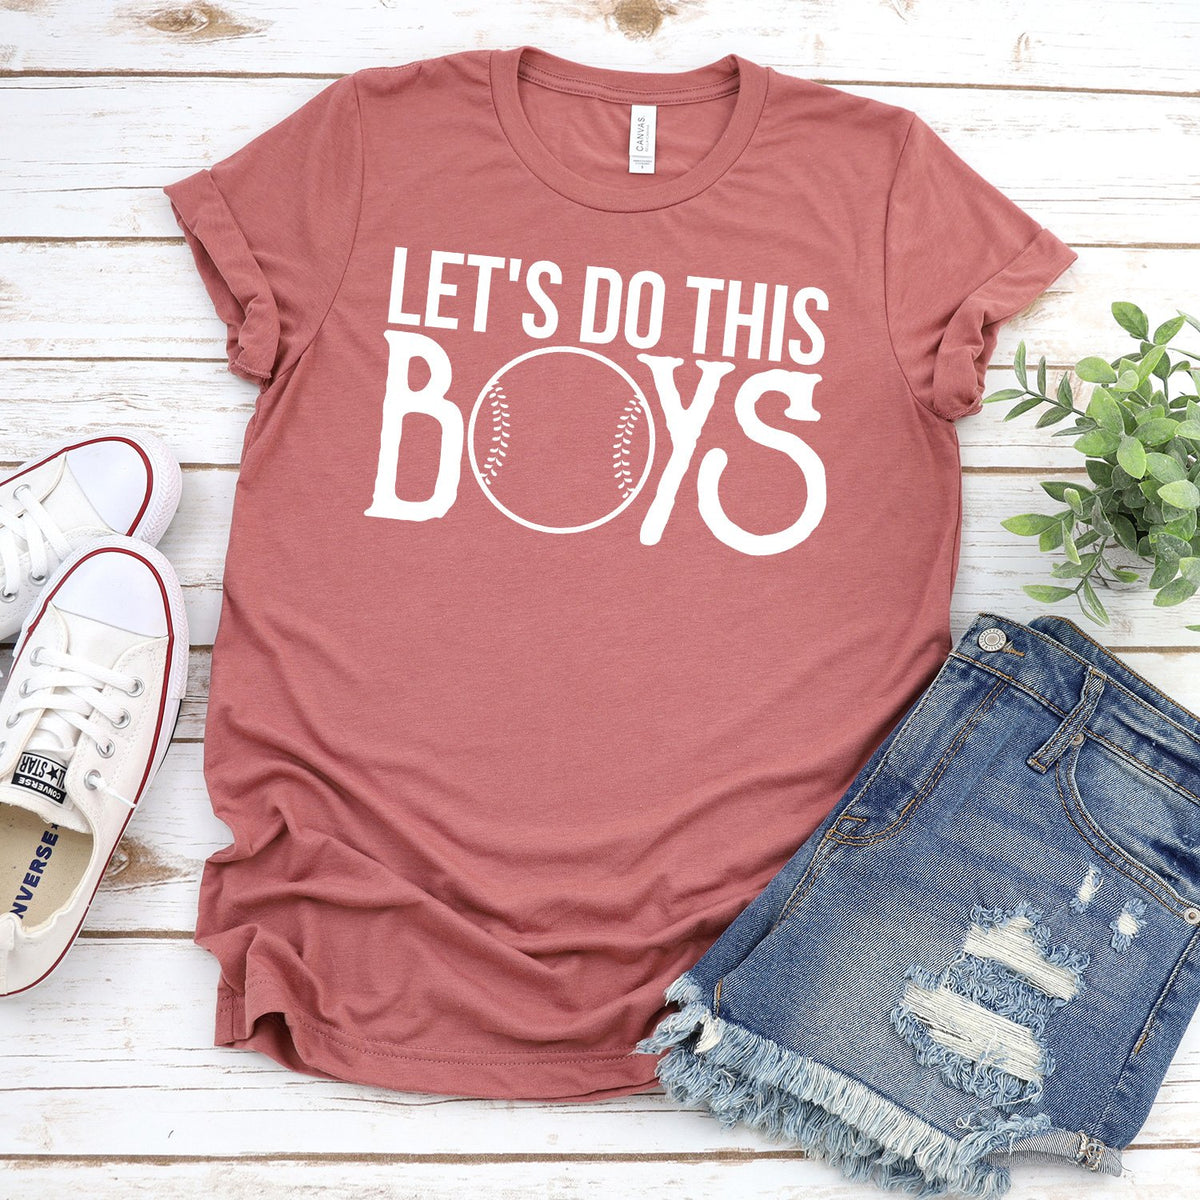 Lets Do This Boys - Short Sleeve Tee Shirt